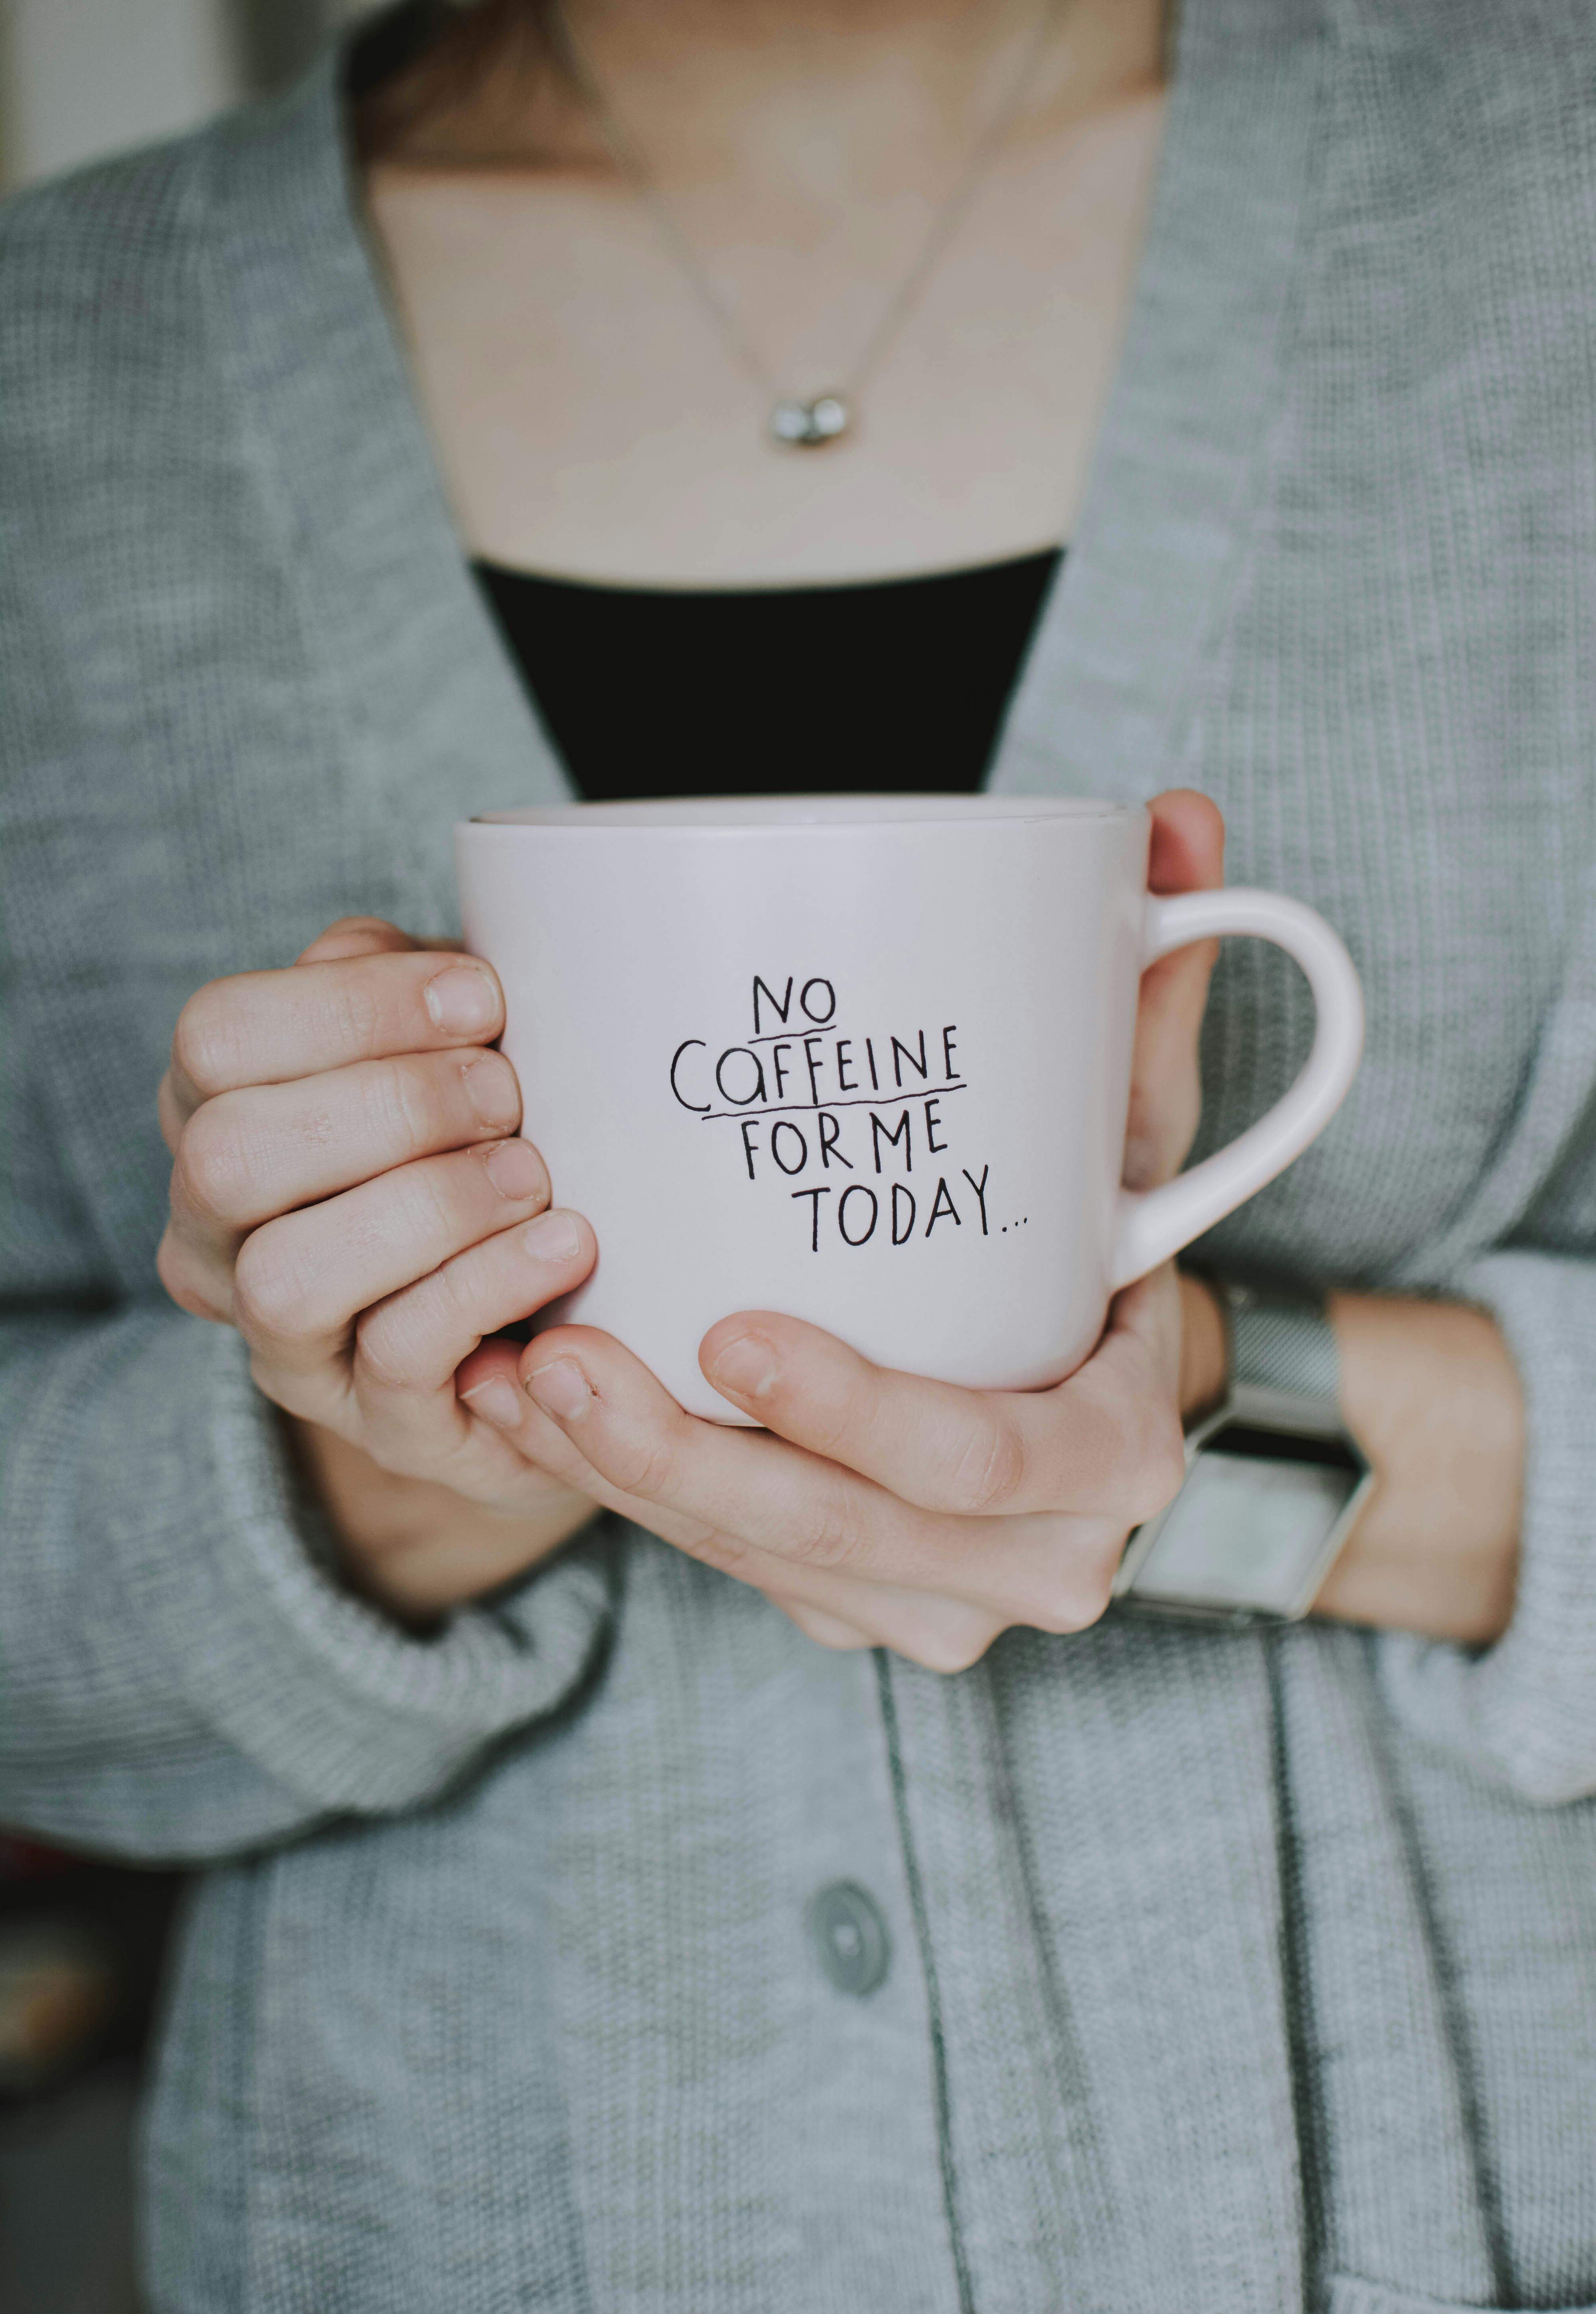 Woman Holding No Coffeine for Me Today-printed Ceramic Mug \u00b7 Free Stock Photo